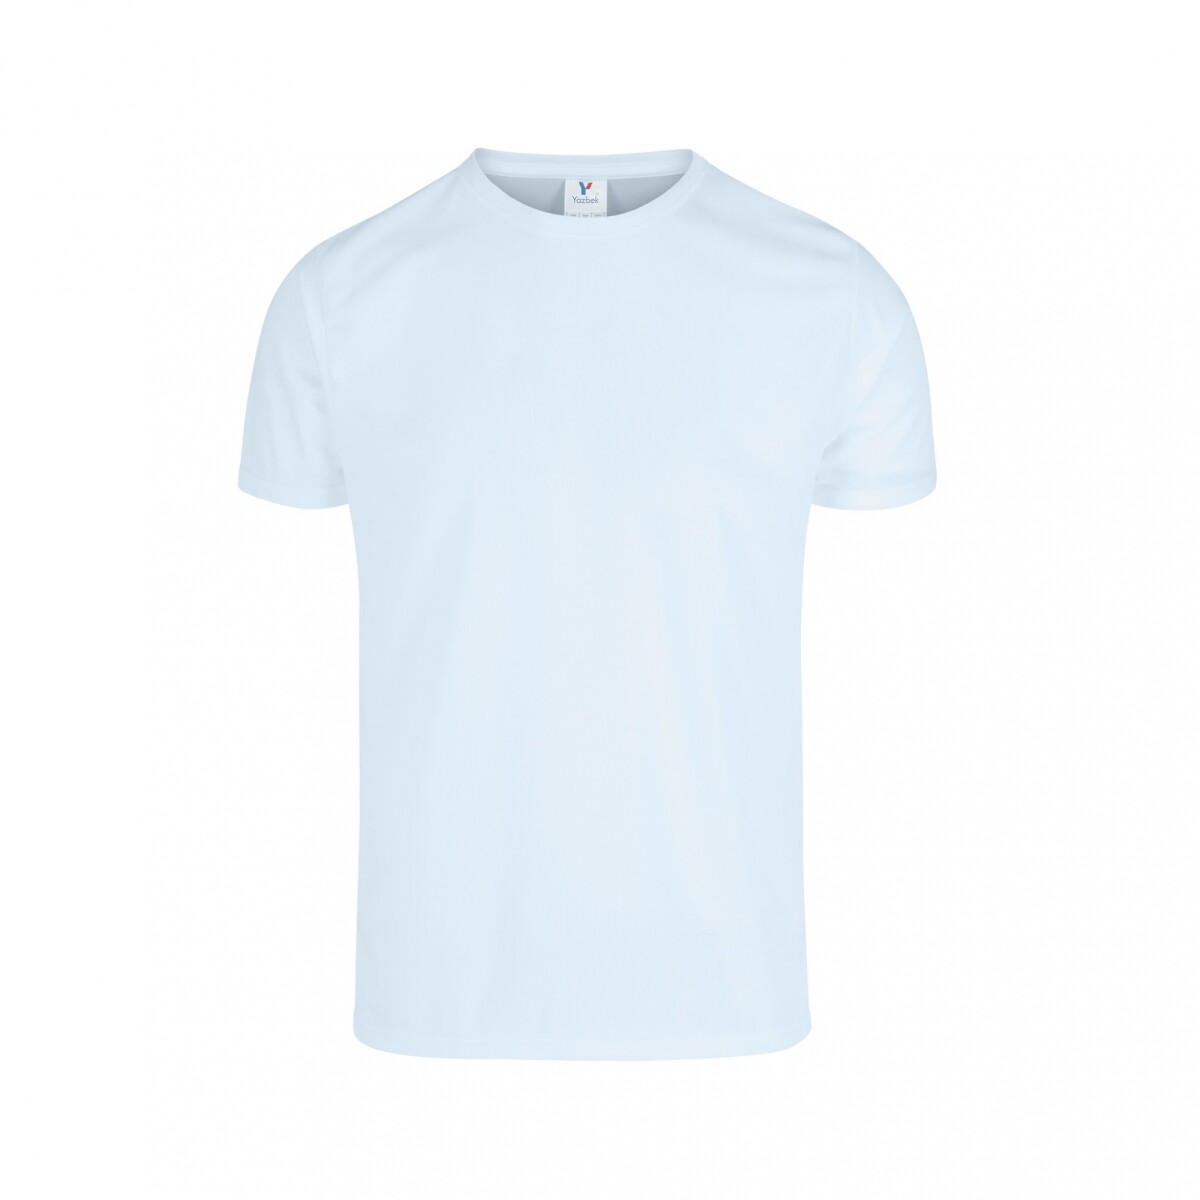 Camiseta a la base dry fit - Blanco 